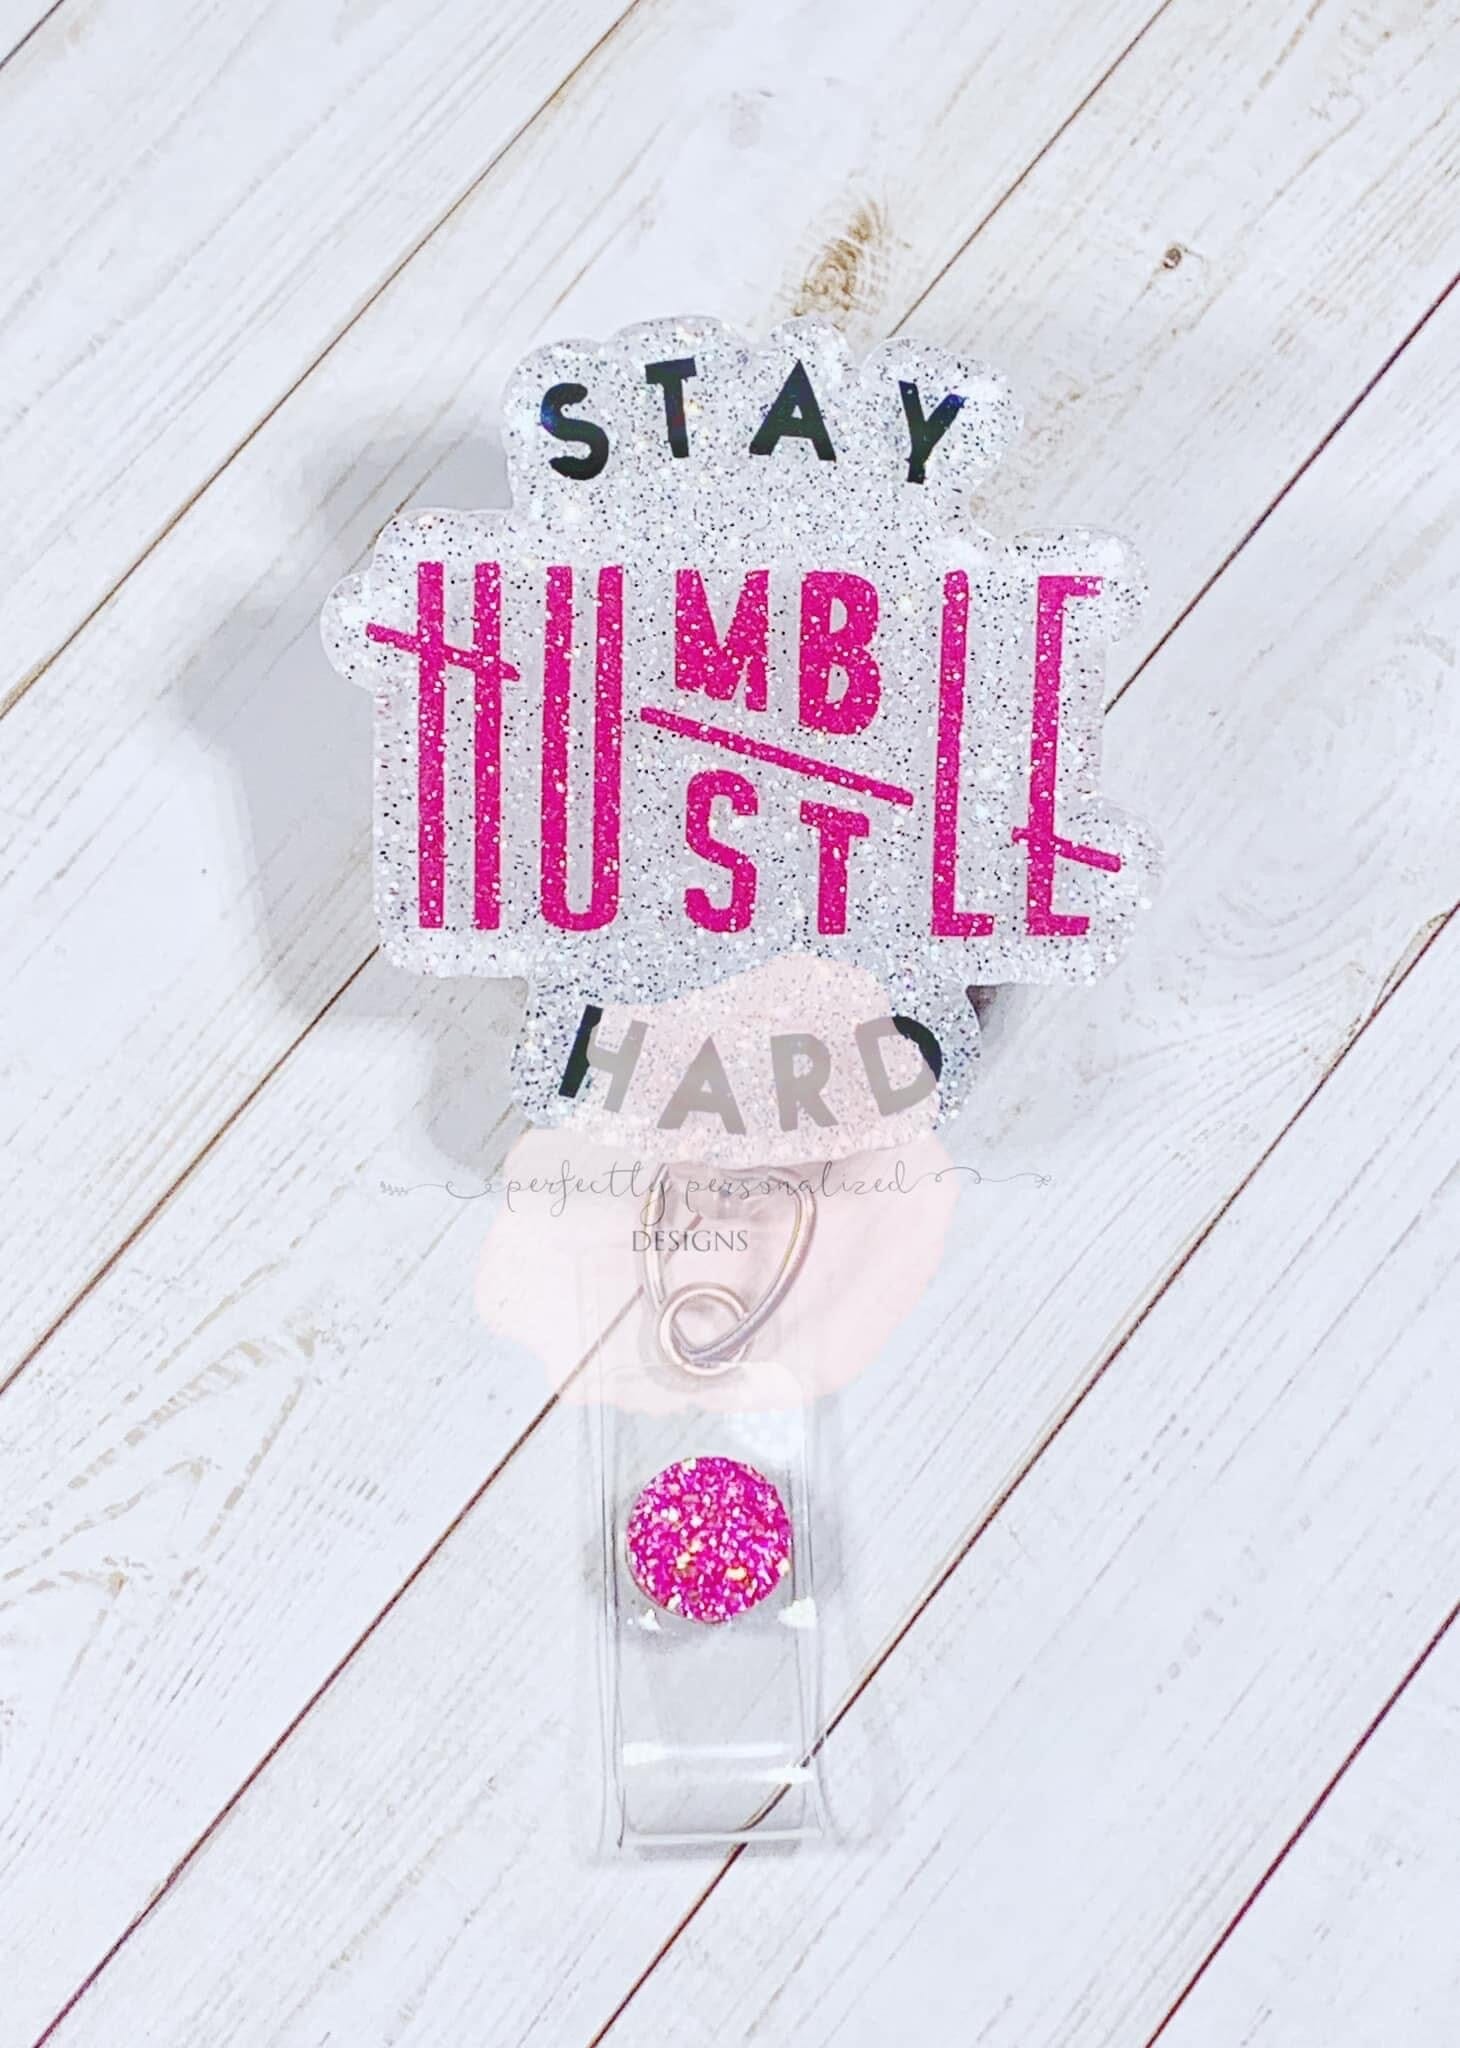 Stay Humble Hustle Hard - Acrylic Shape #705